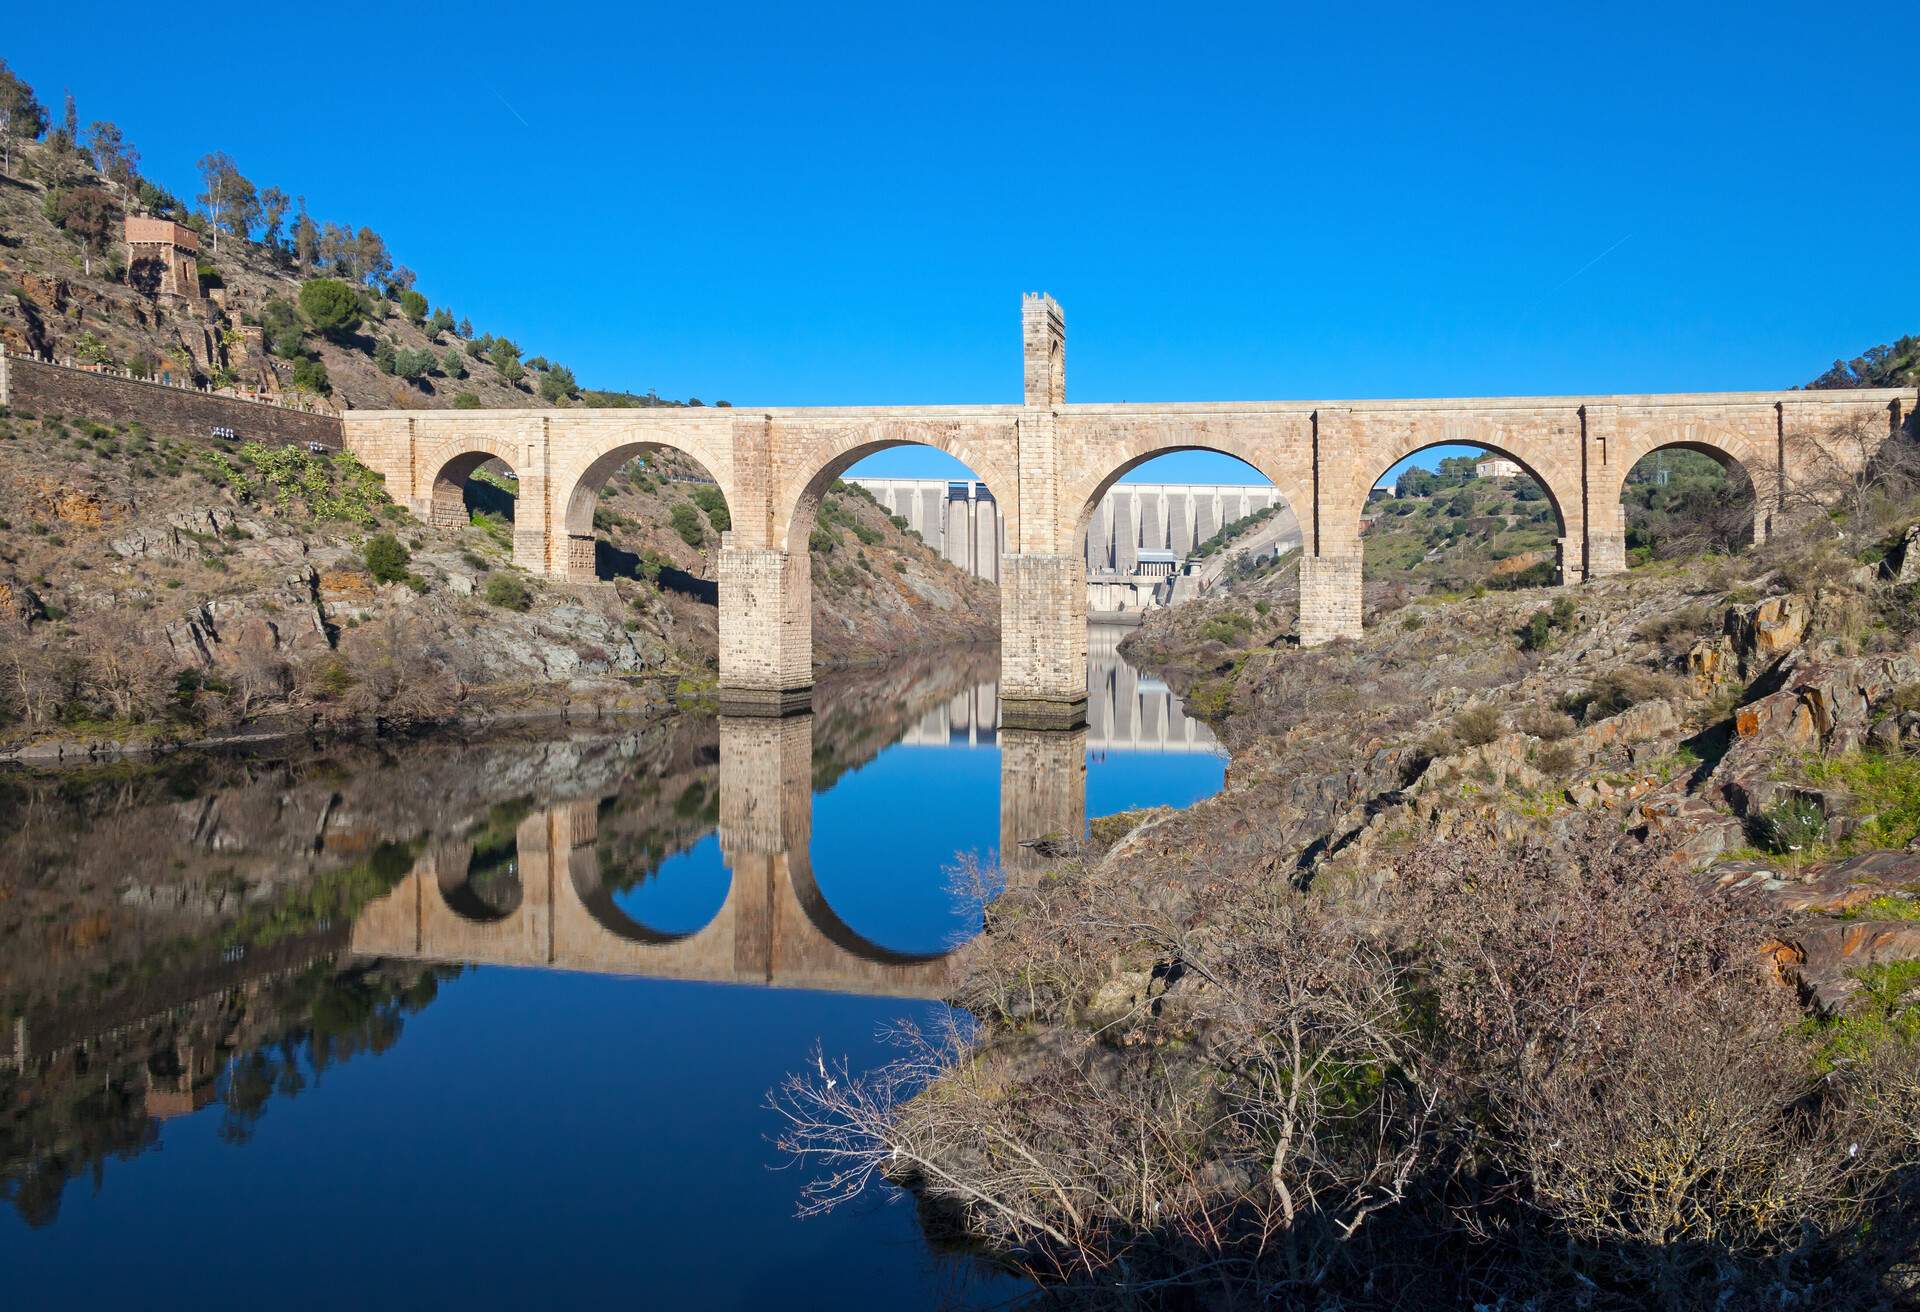 Alcántara Bridge over the Tagus River at Alcántara (Extremadura, Spain). Its a Roman stone arch bridge, built between 104 and 106 AD. In the background is seen the dam of the Alcántara reservoir.